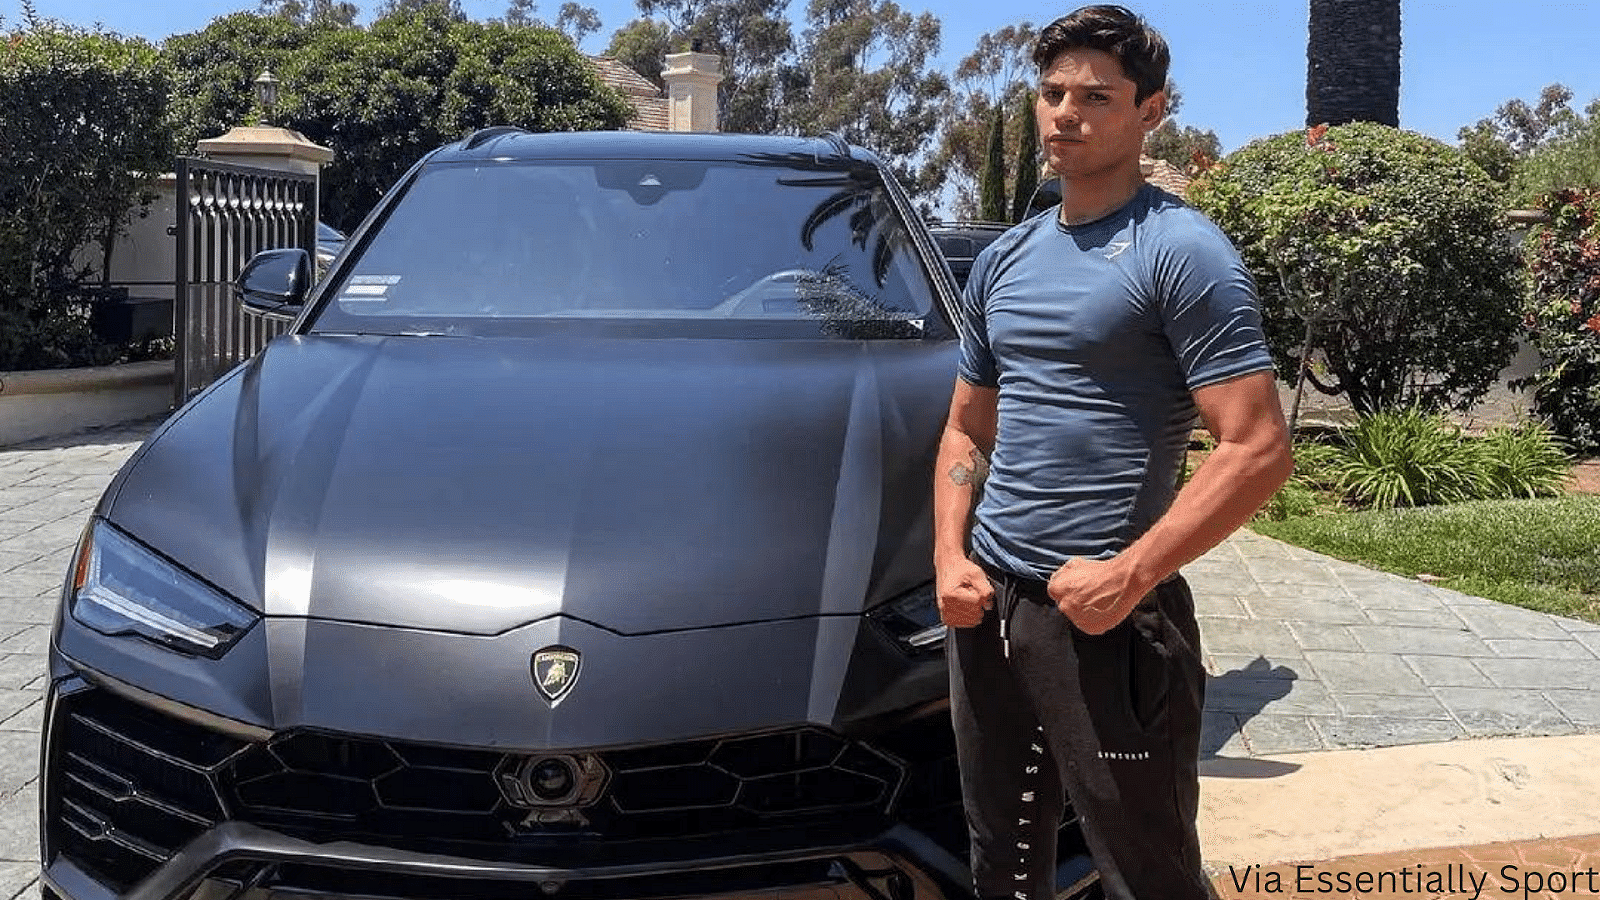 Ryan Garcia's Lamborghini Urus